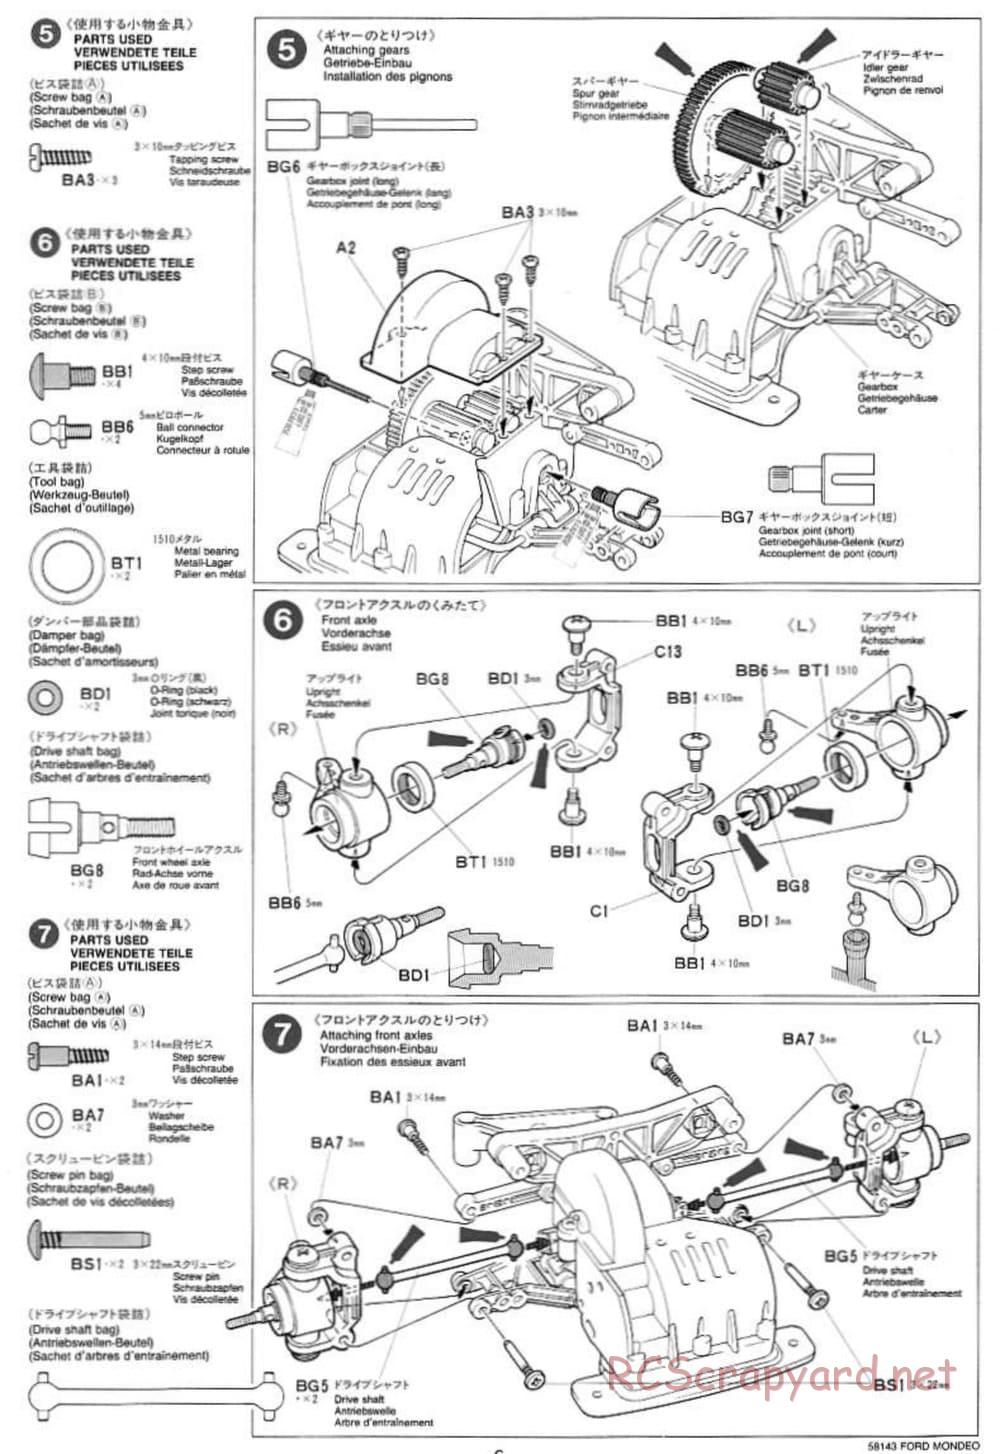 Tamiya - Ford Mondeo BTCC - FF-01 Chassis - Manual - Page 6